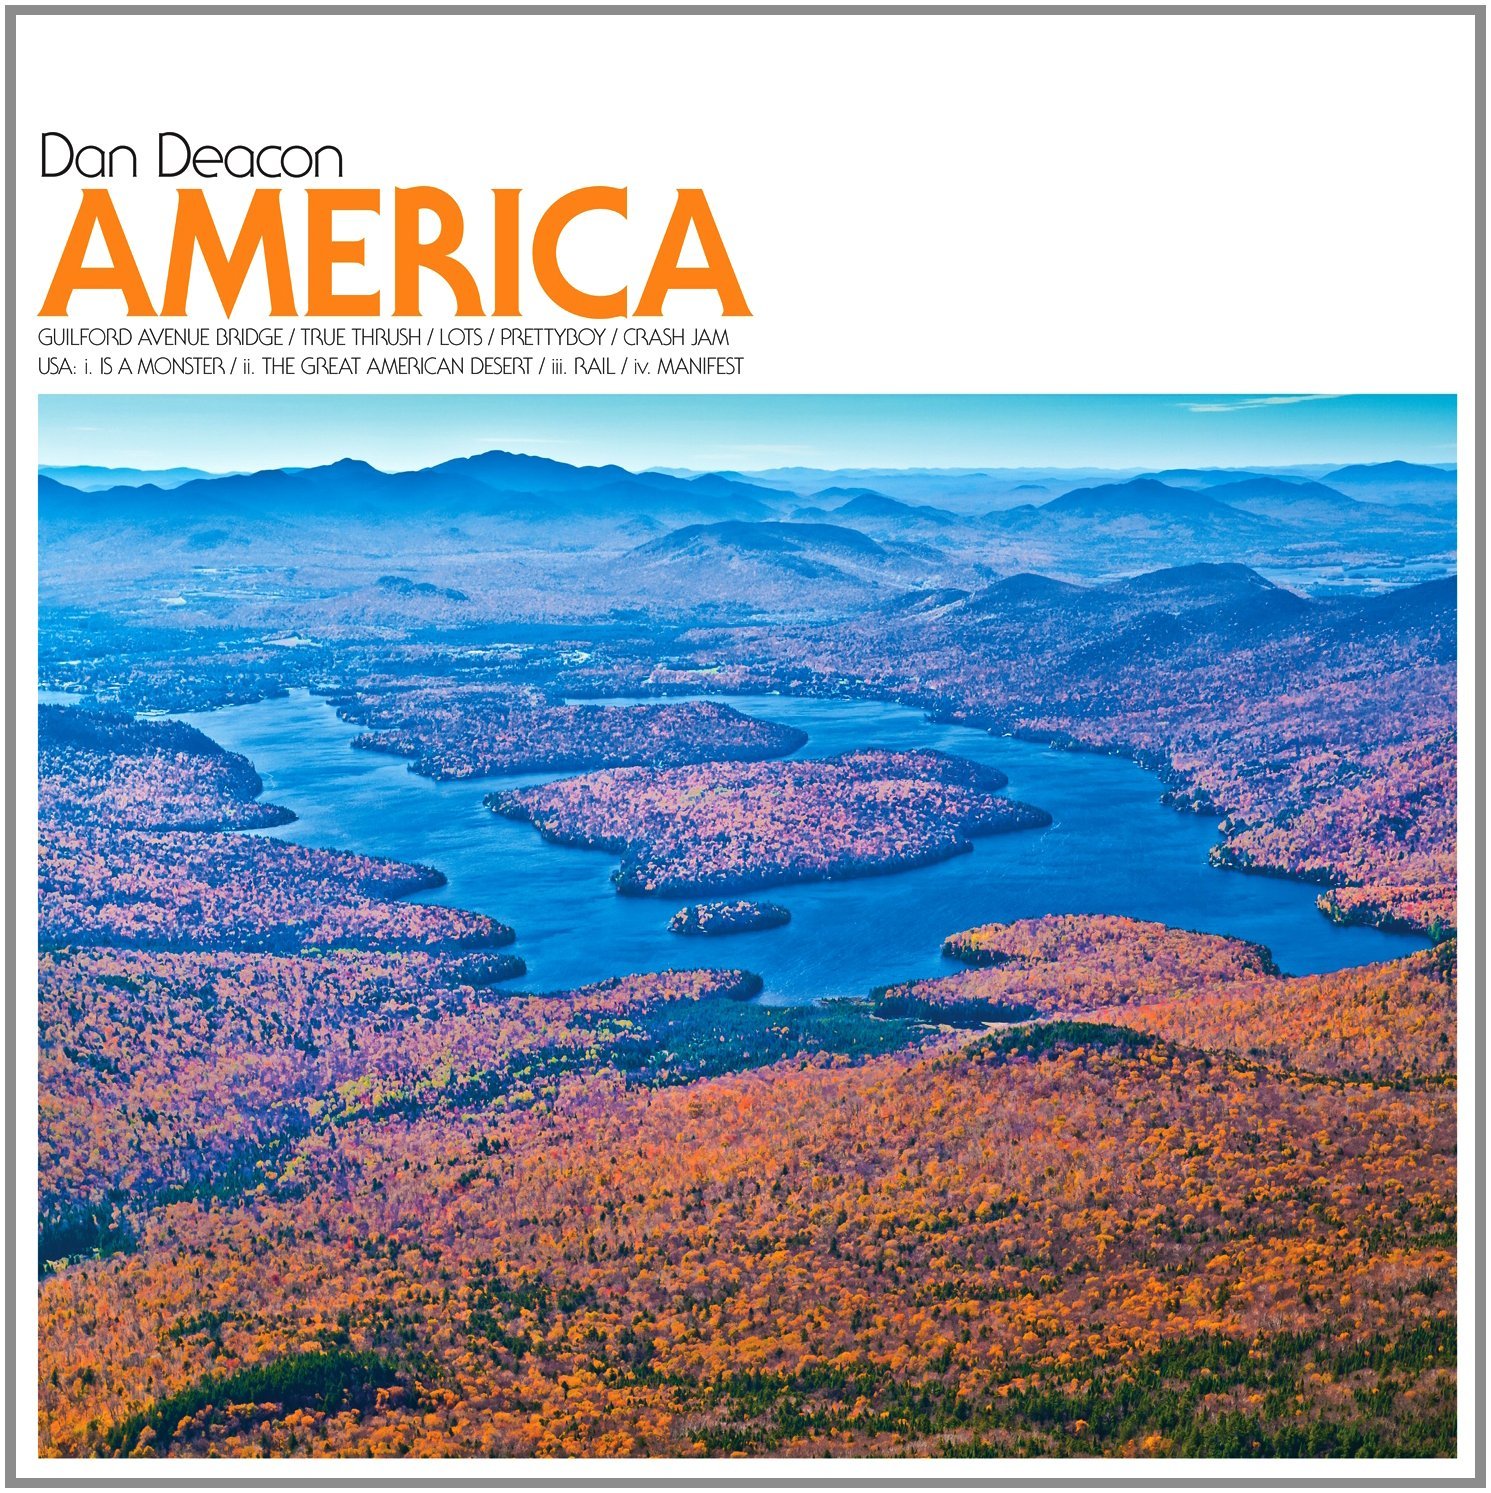 A SCENE IN RETROSPECT: Dan Deacon – “America”